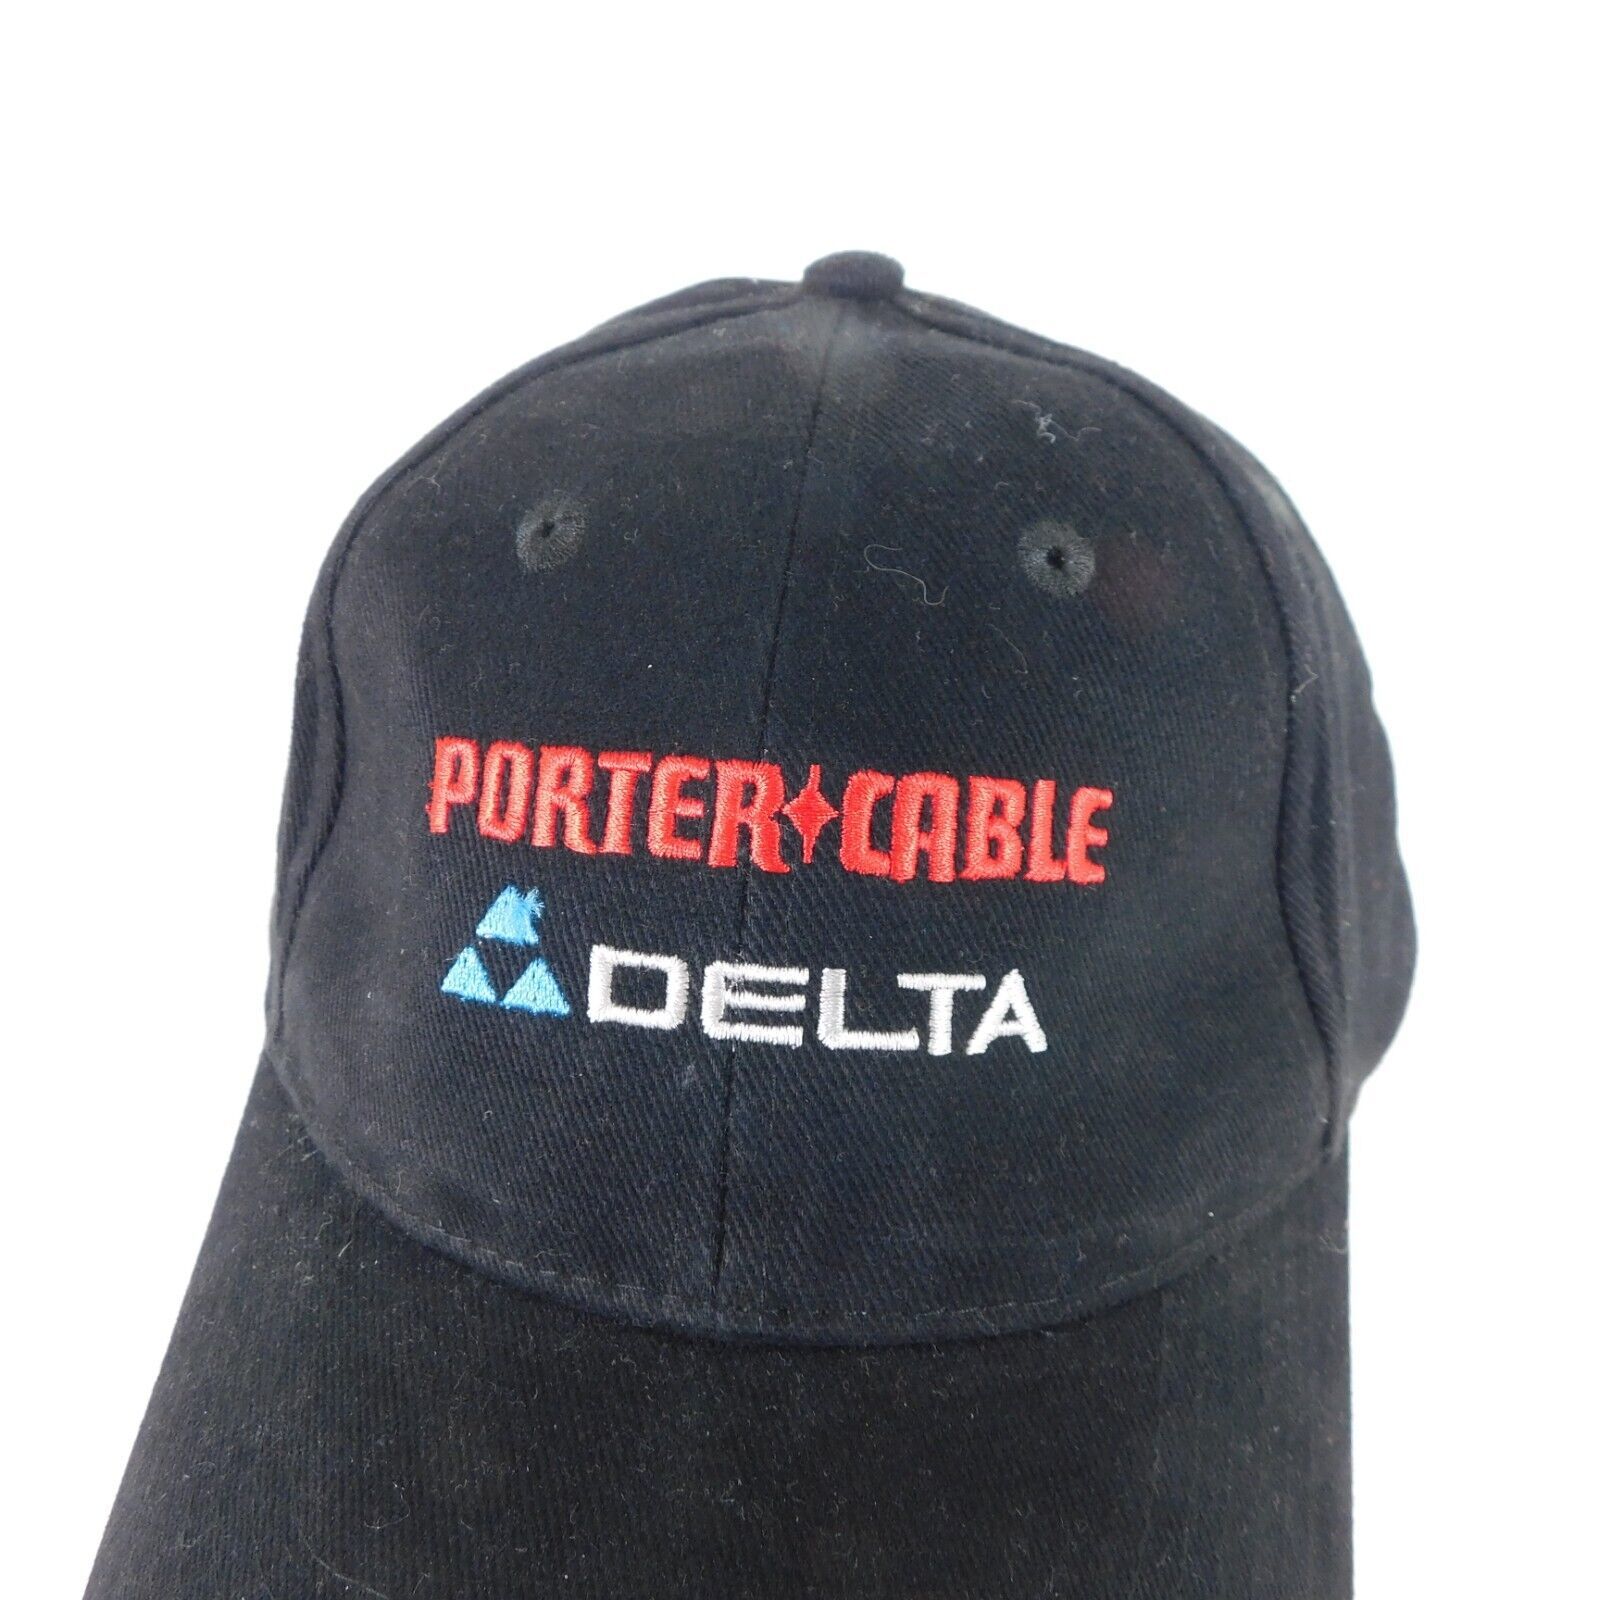 Coupe Memorial Cup 2003 Mage Pros Hat Men One Size Black Cap Porter Cable Delta - $19.35